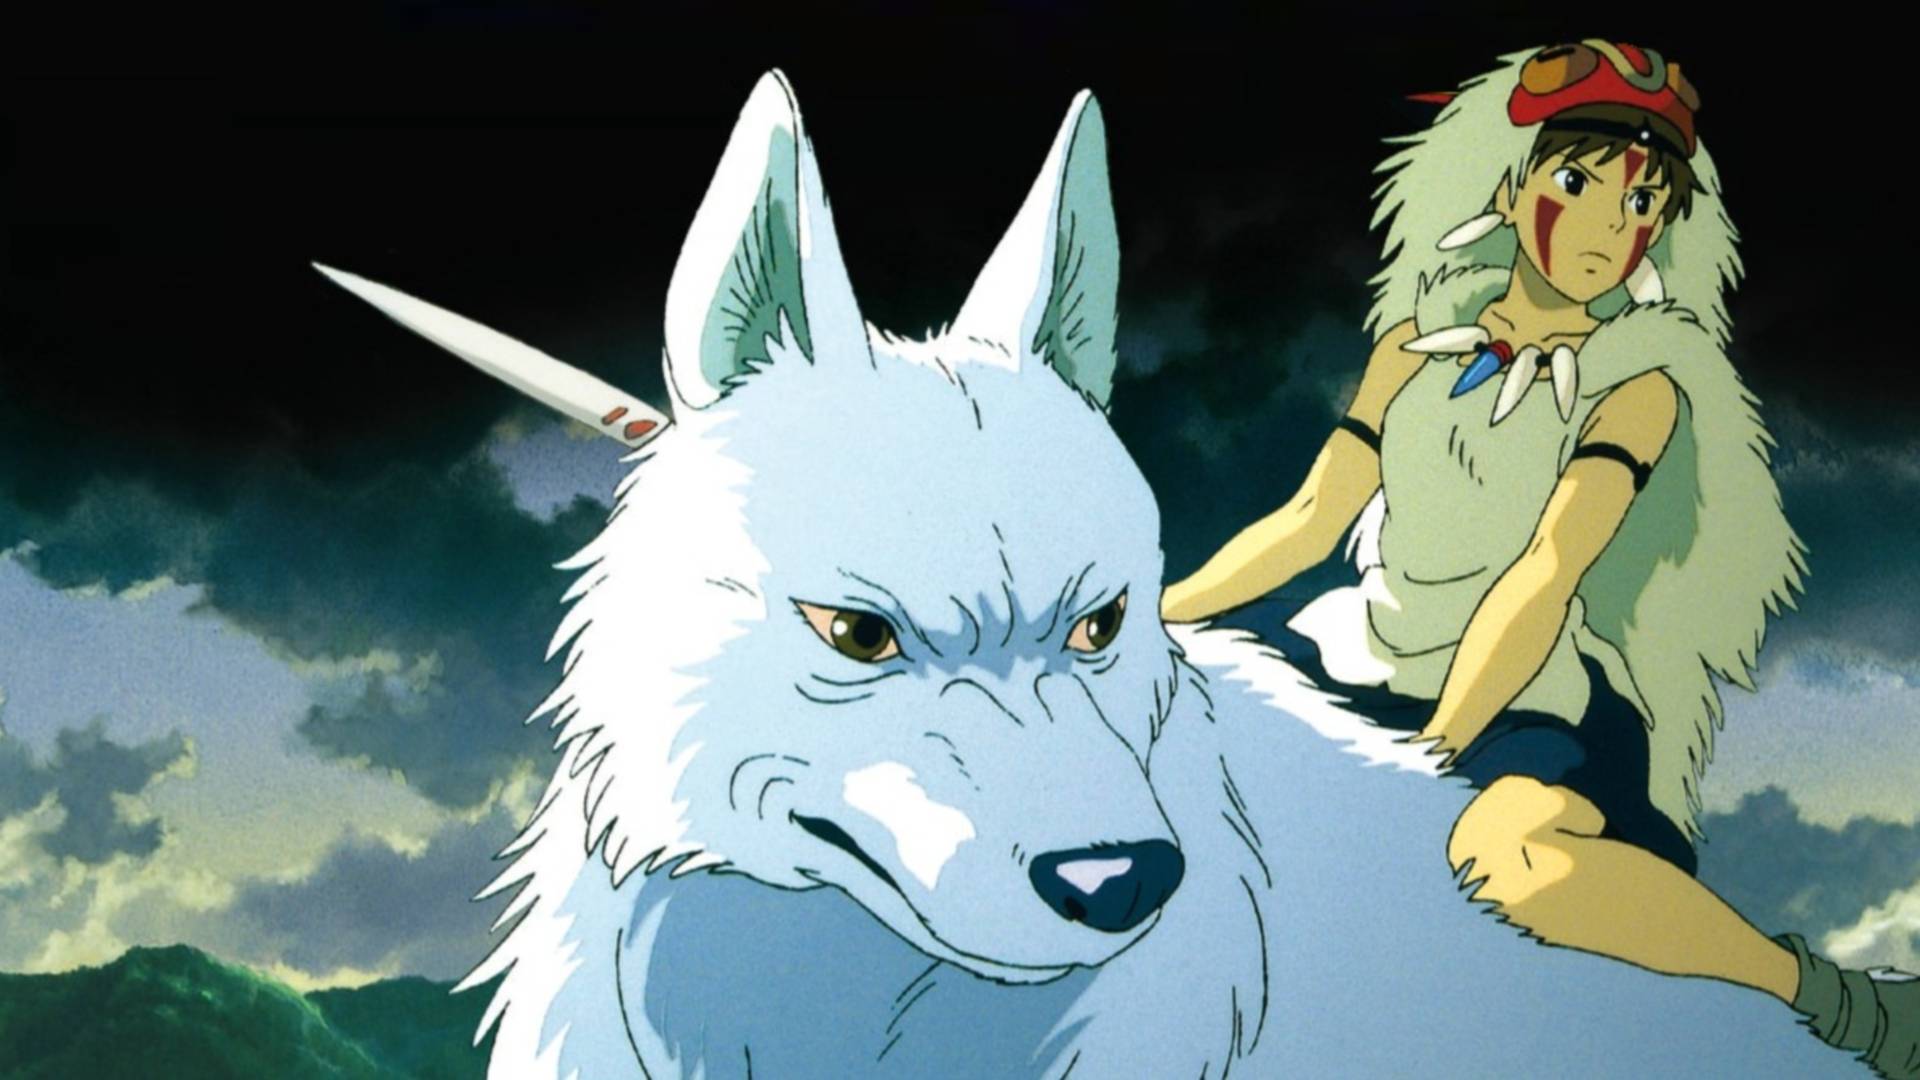 37 HQ Images Best Studio Ghibli Movies Ranked Reddit - Cat Kingdom Anime Movie